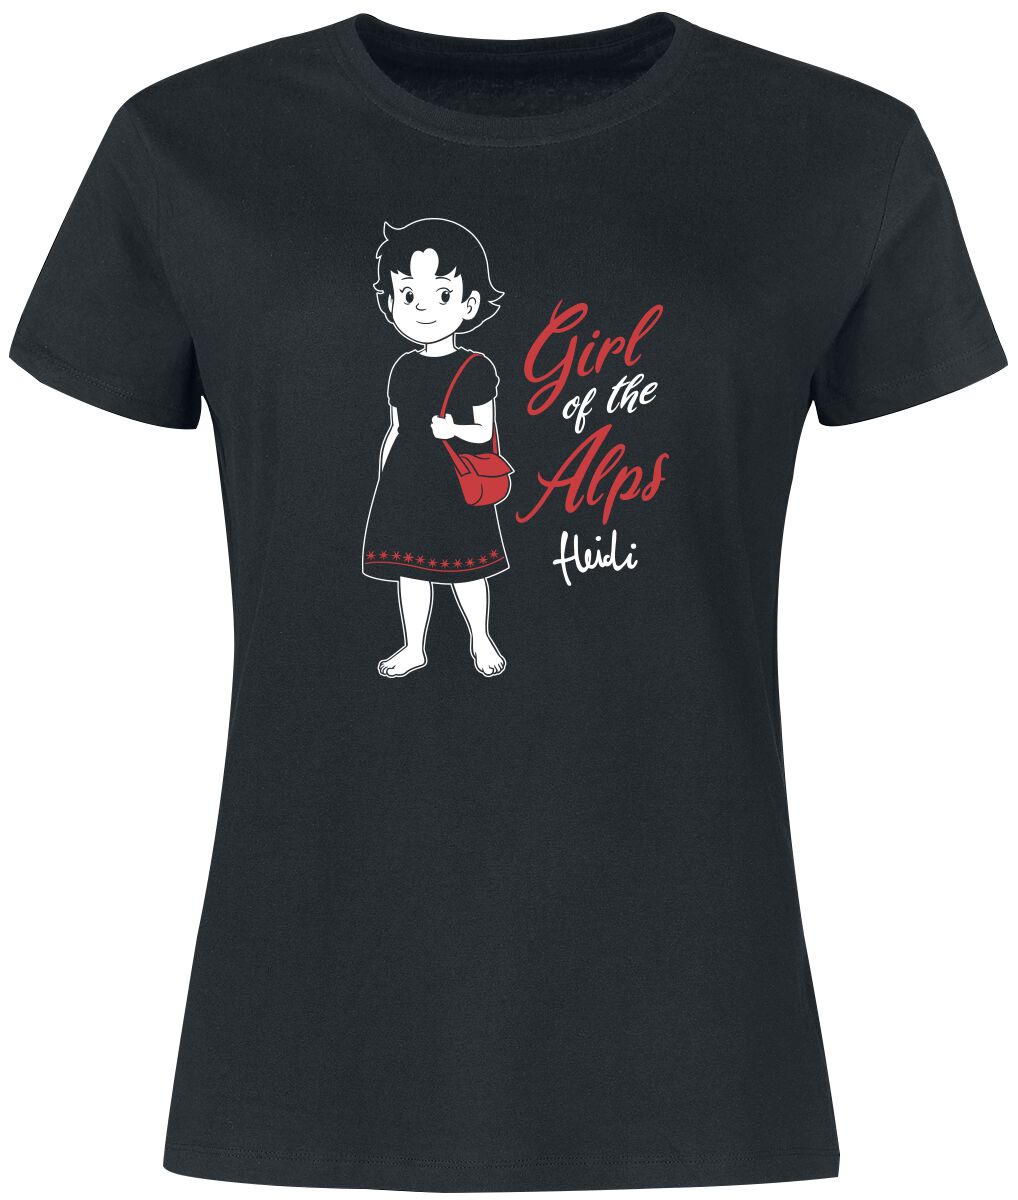 Heidi Girl Of The Alps T-Shirt schwarz in M